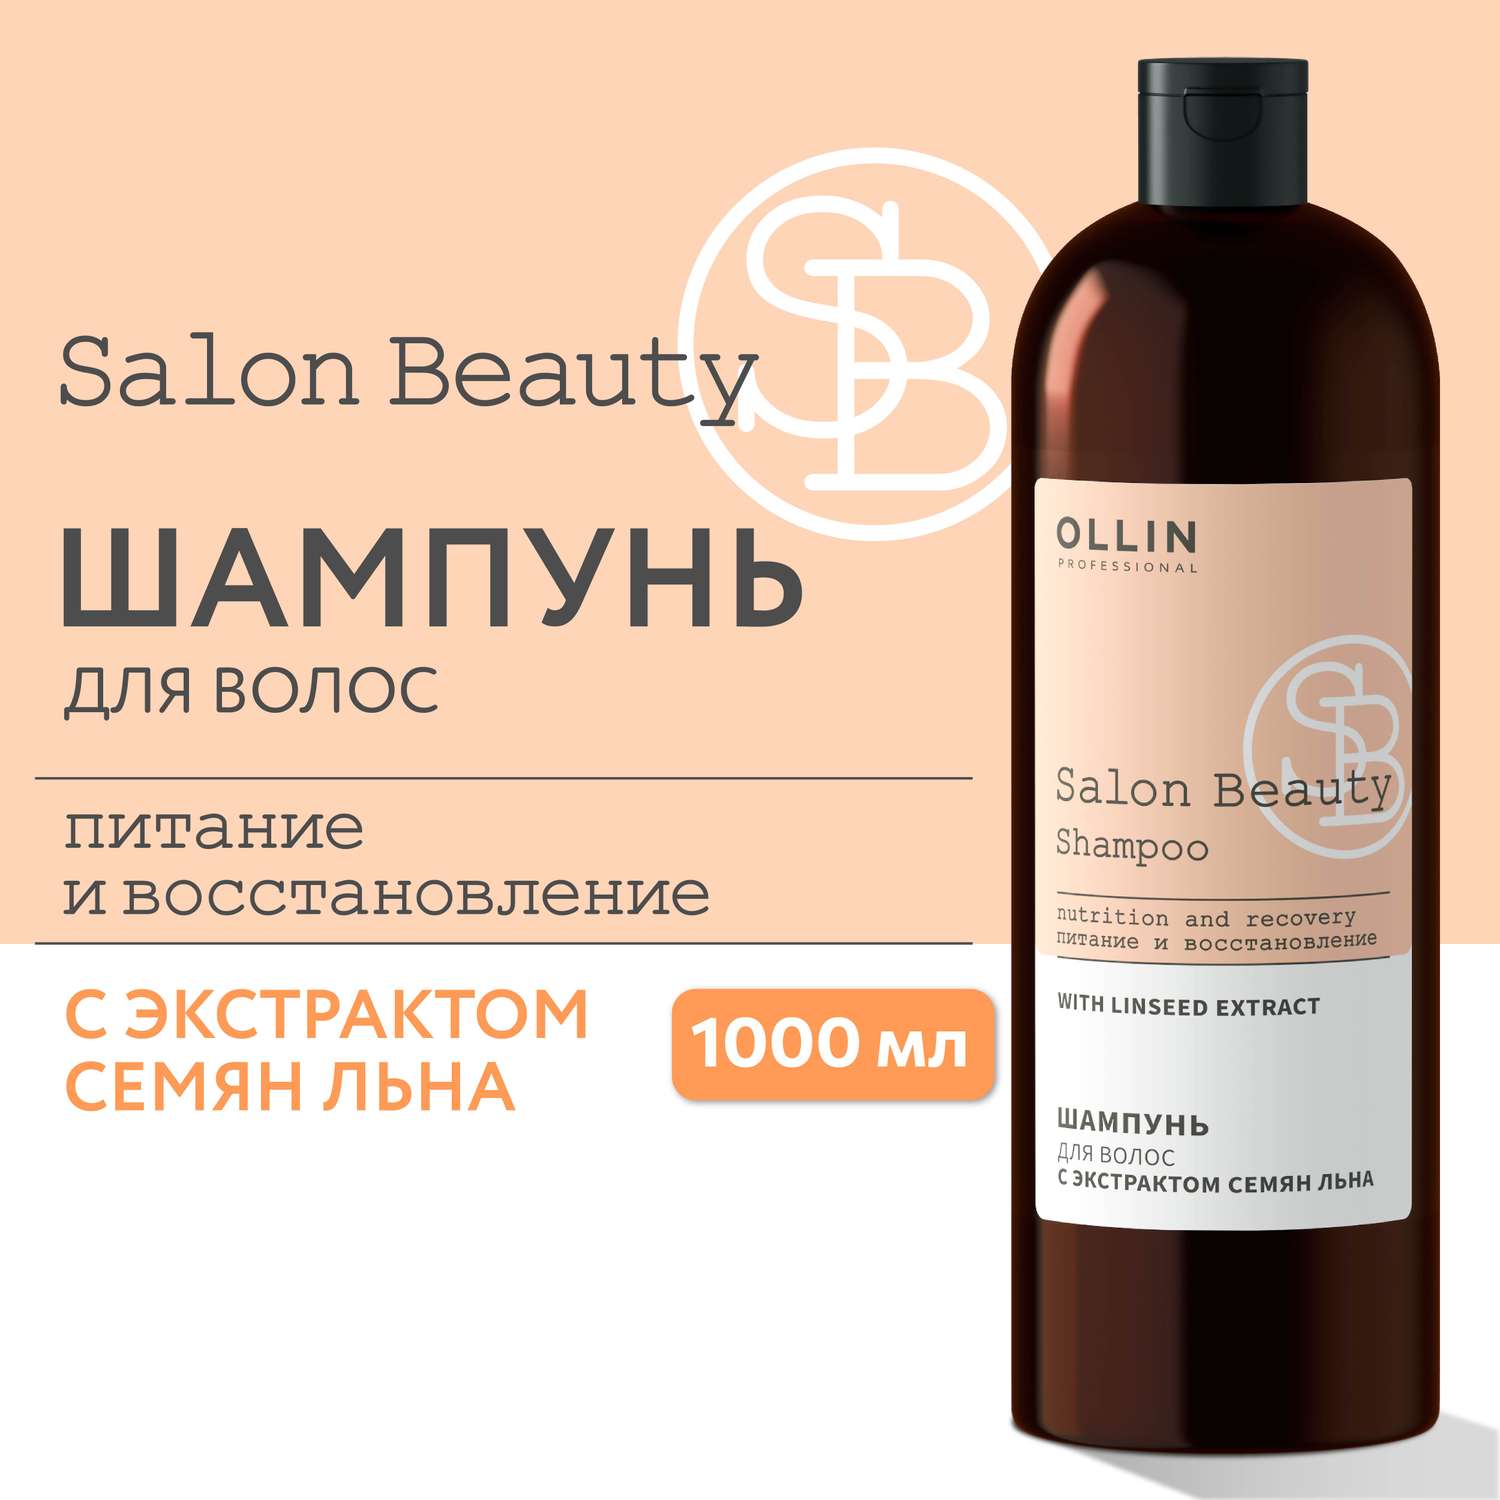 Шампунь Ollin salon beauty для ухода за волосами с экстрактом семян льна 1000 мл - фото 2